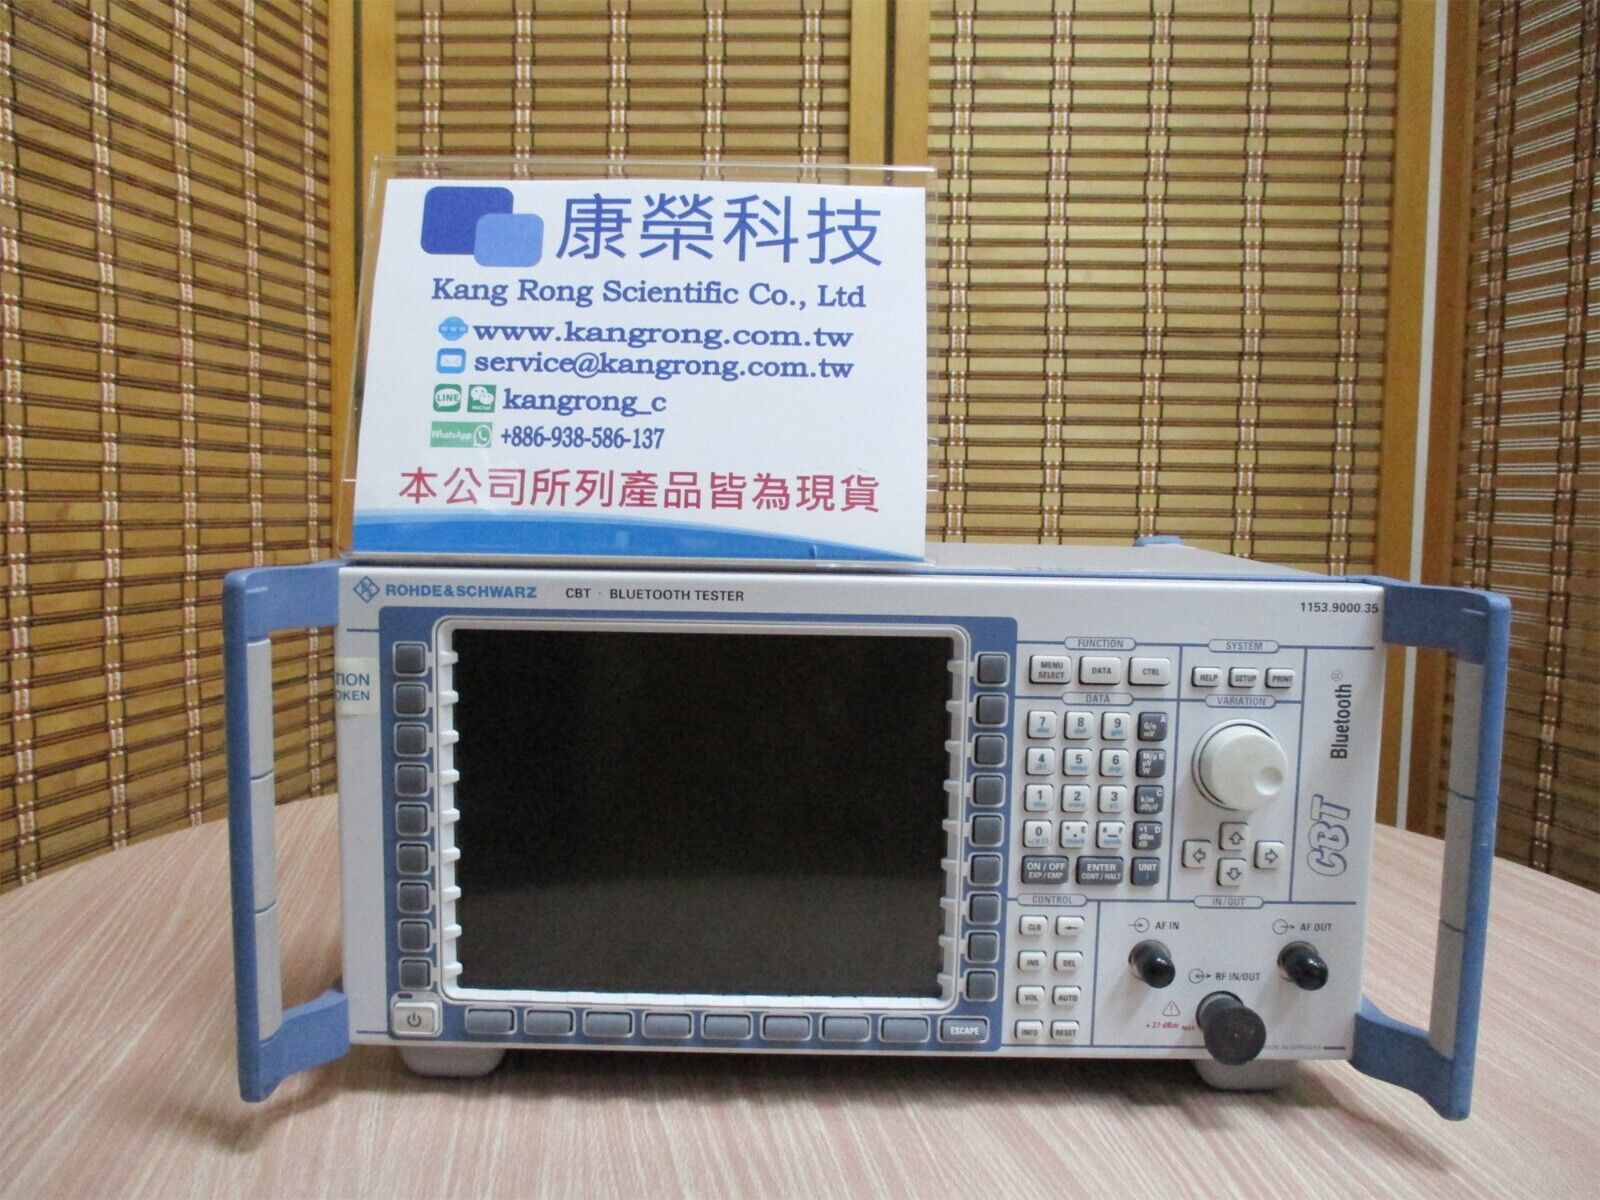 【Kang Rong Scientific】Rohde & Schwarz CBT K55-K57-B55 Bluetooth tester